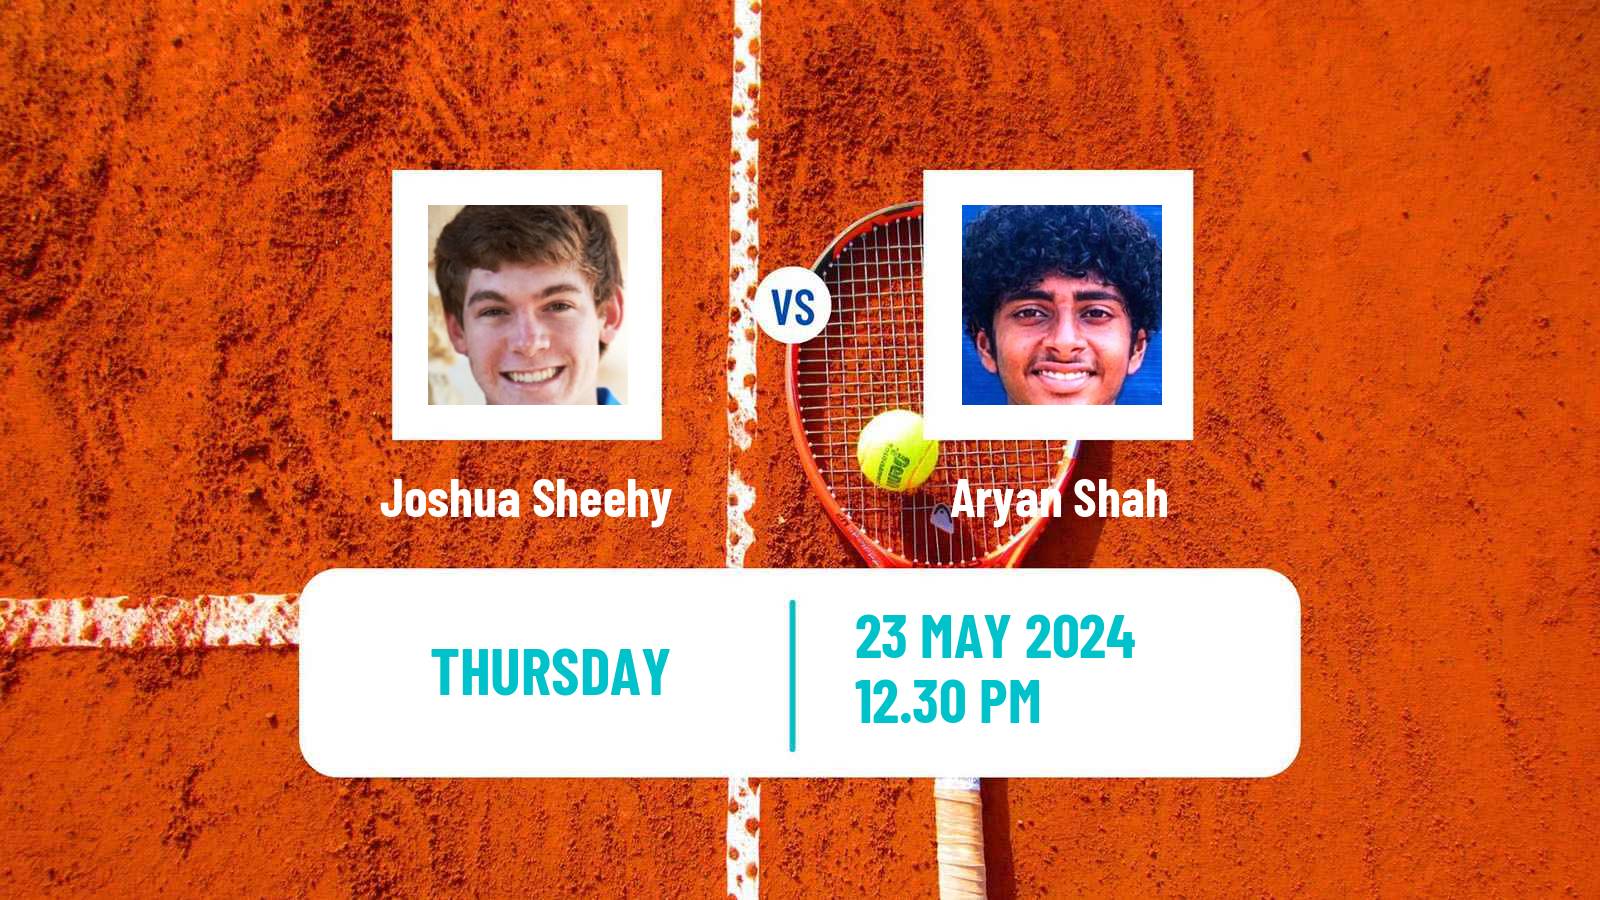 Tennis ITF M15 Kingston 2 Men Joshua Sheehy - Aryan Shah